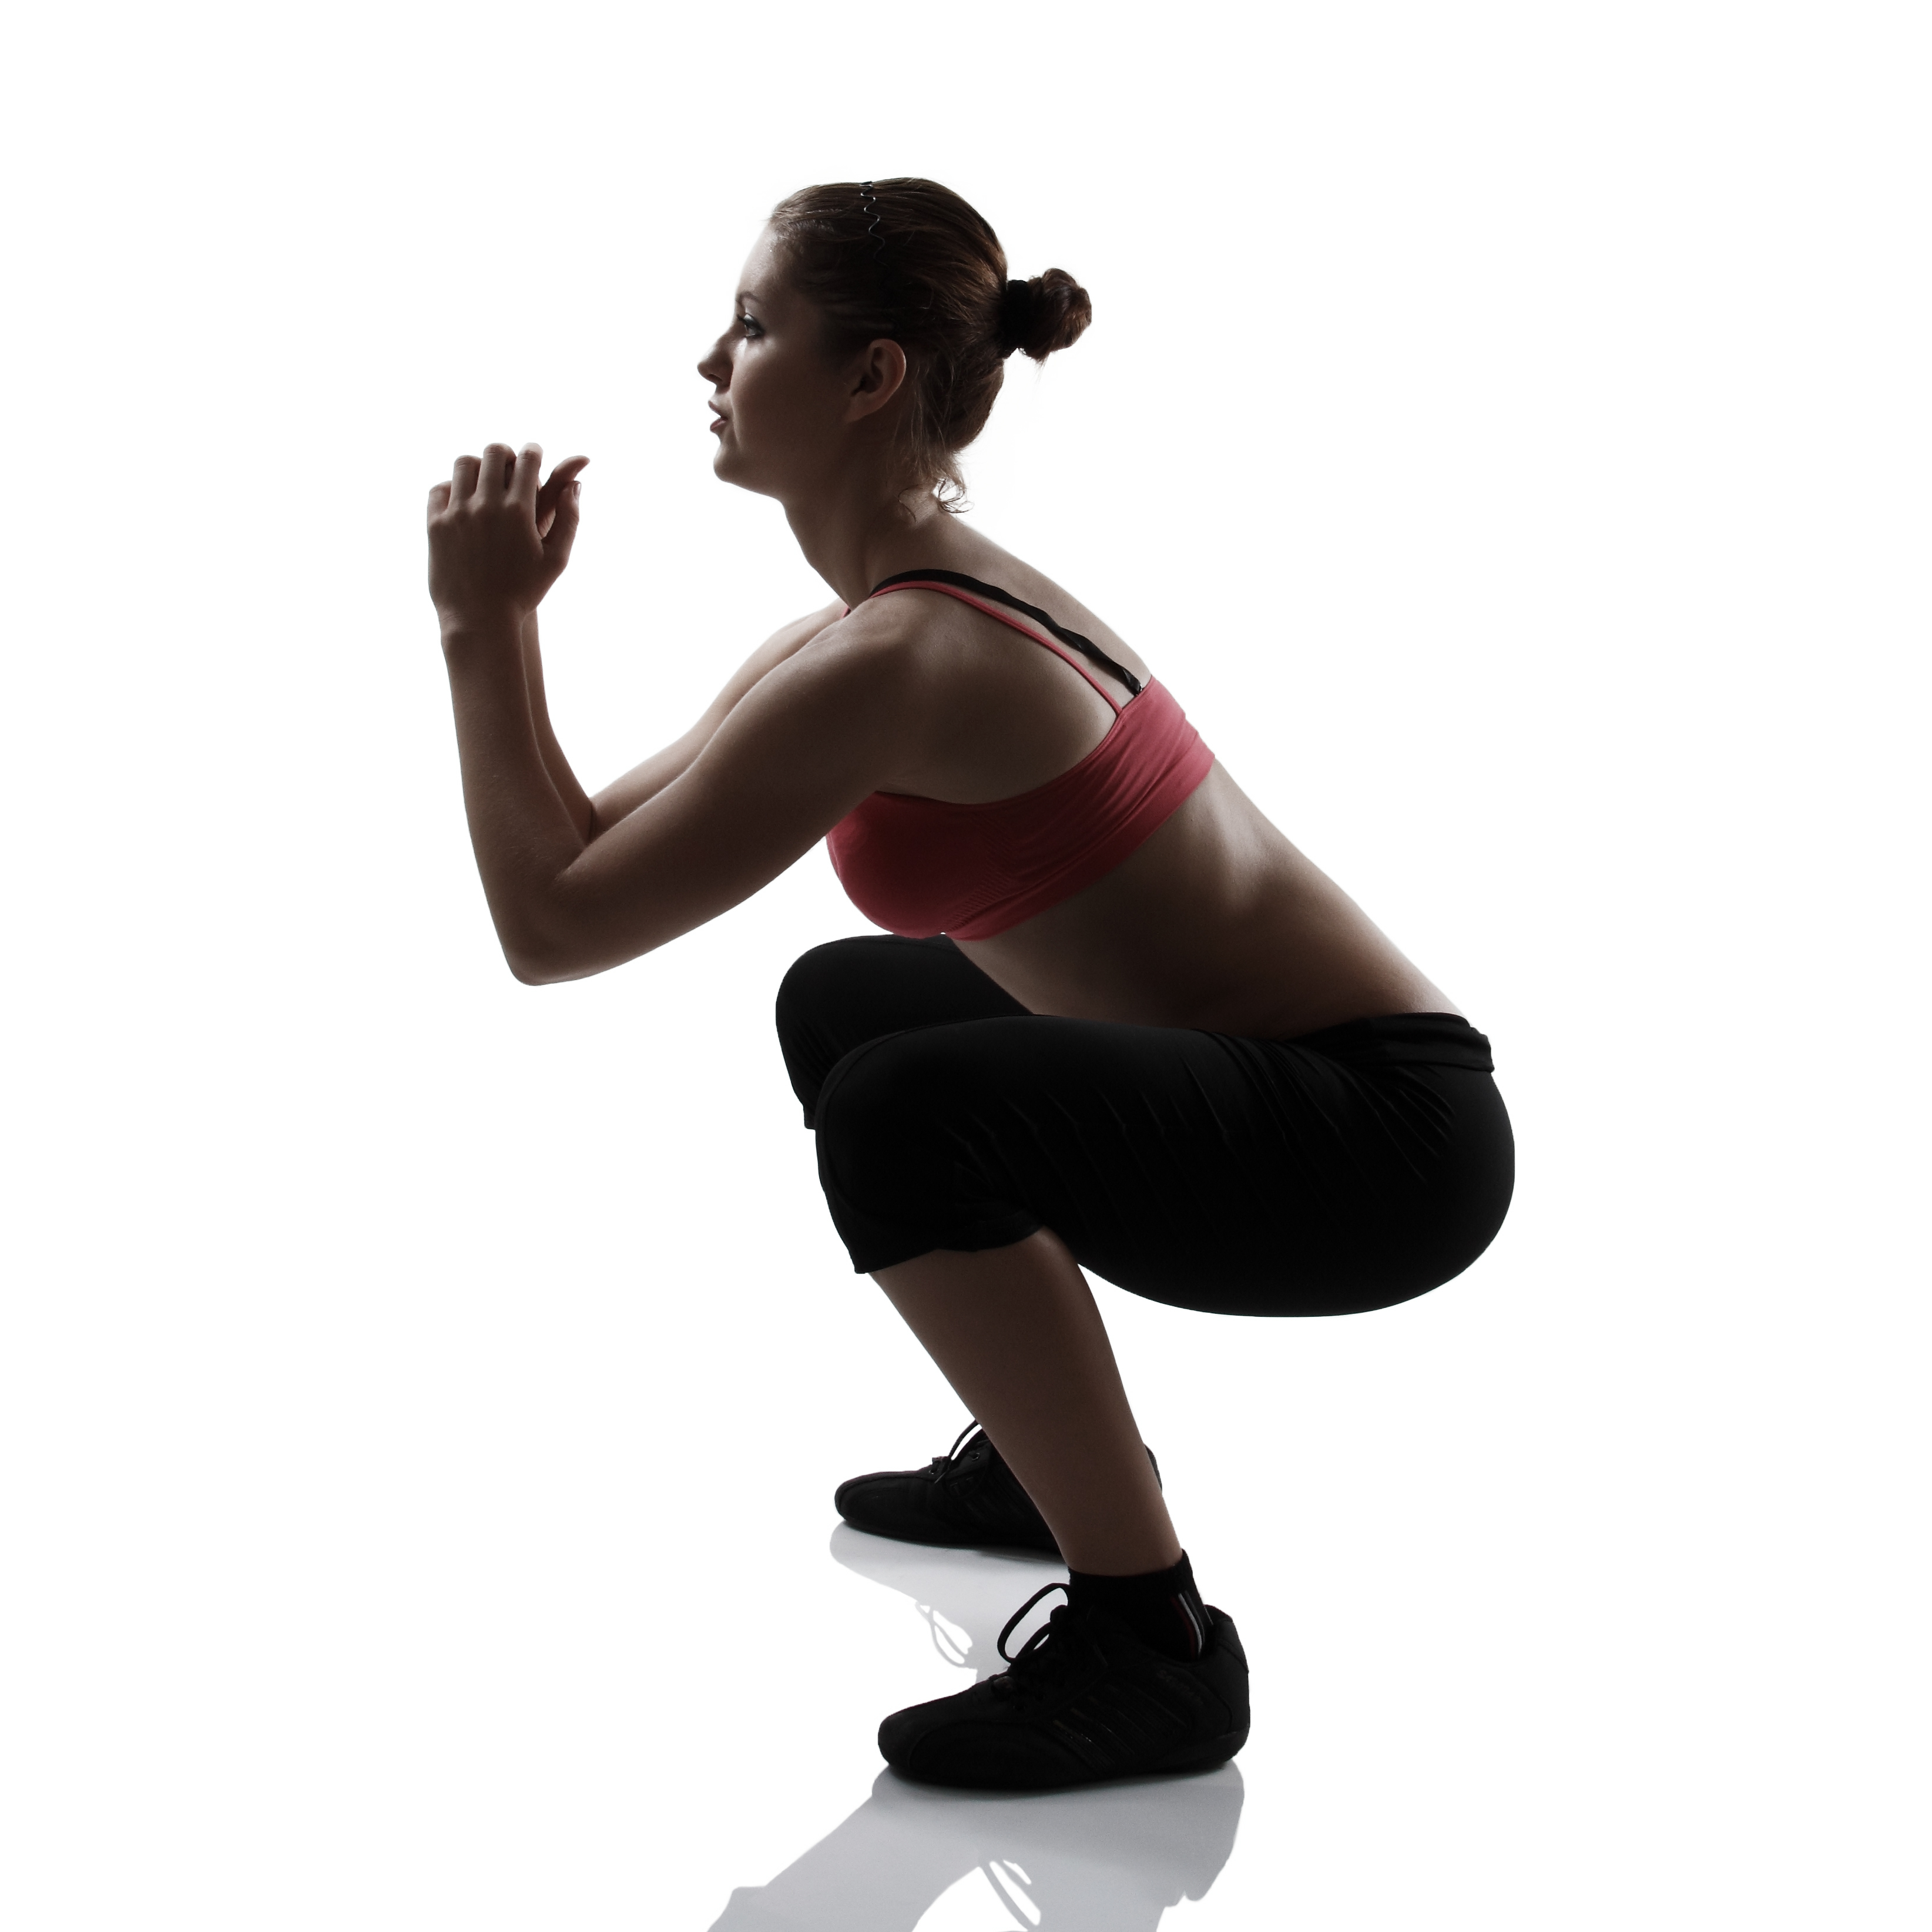 https://www.stoneclinic.com/sites/default/files/2018-09/squat-best-exercise-stone-clinic-pt_116698471.jpg